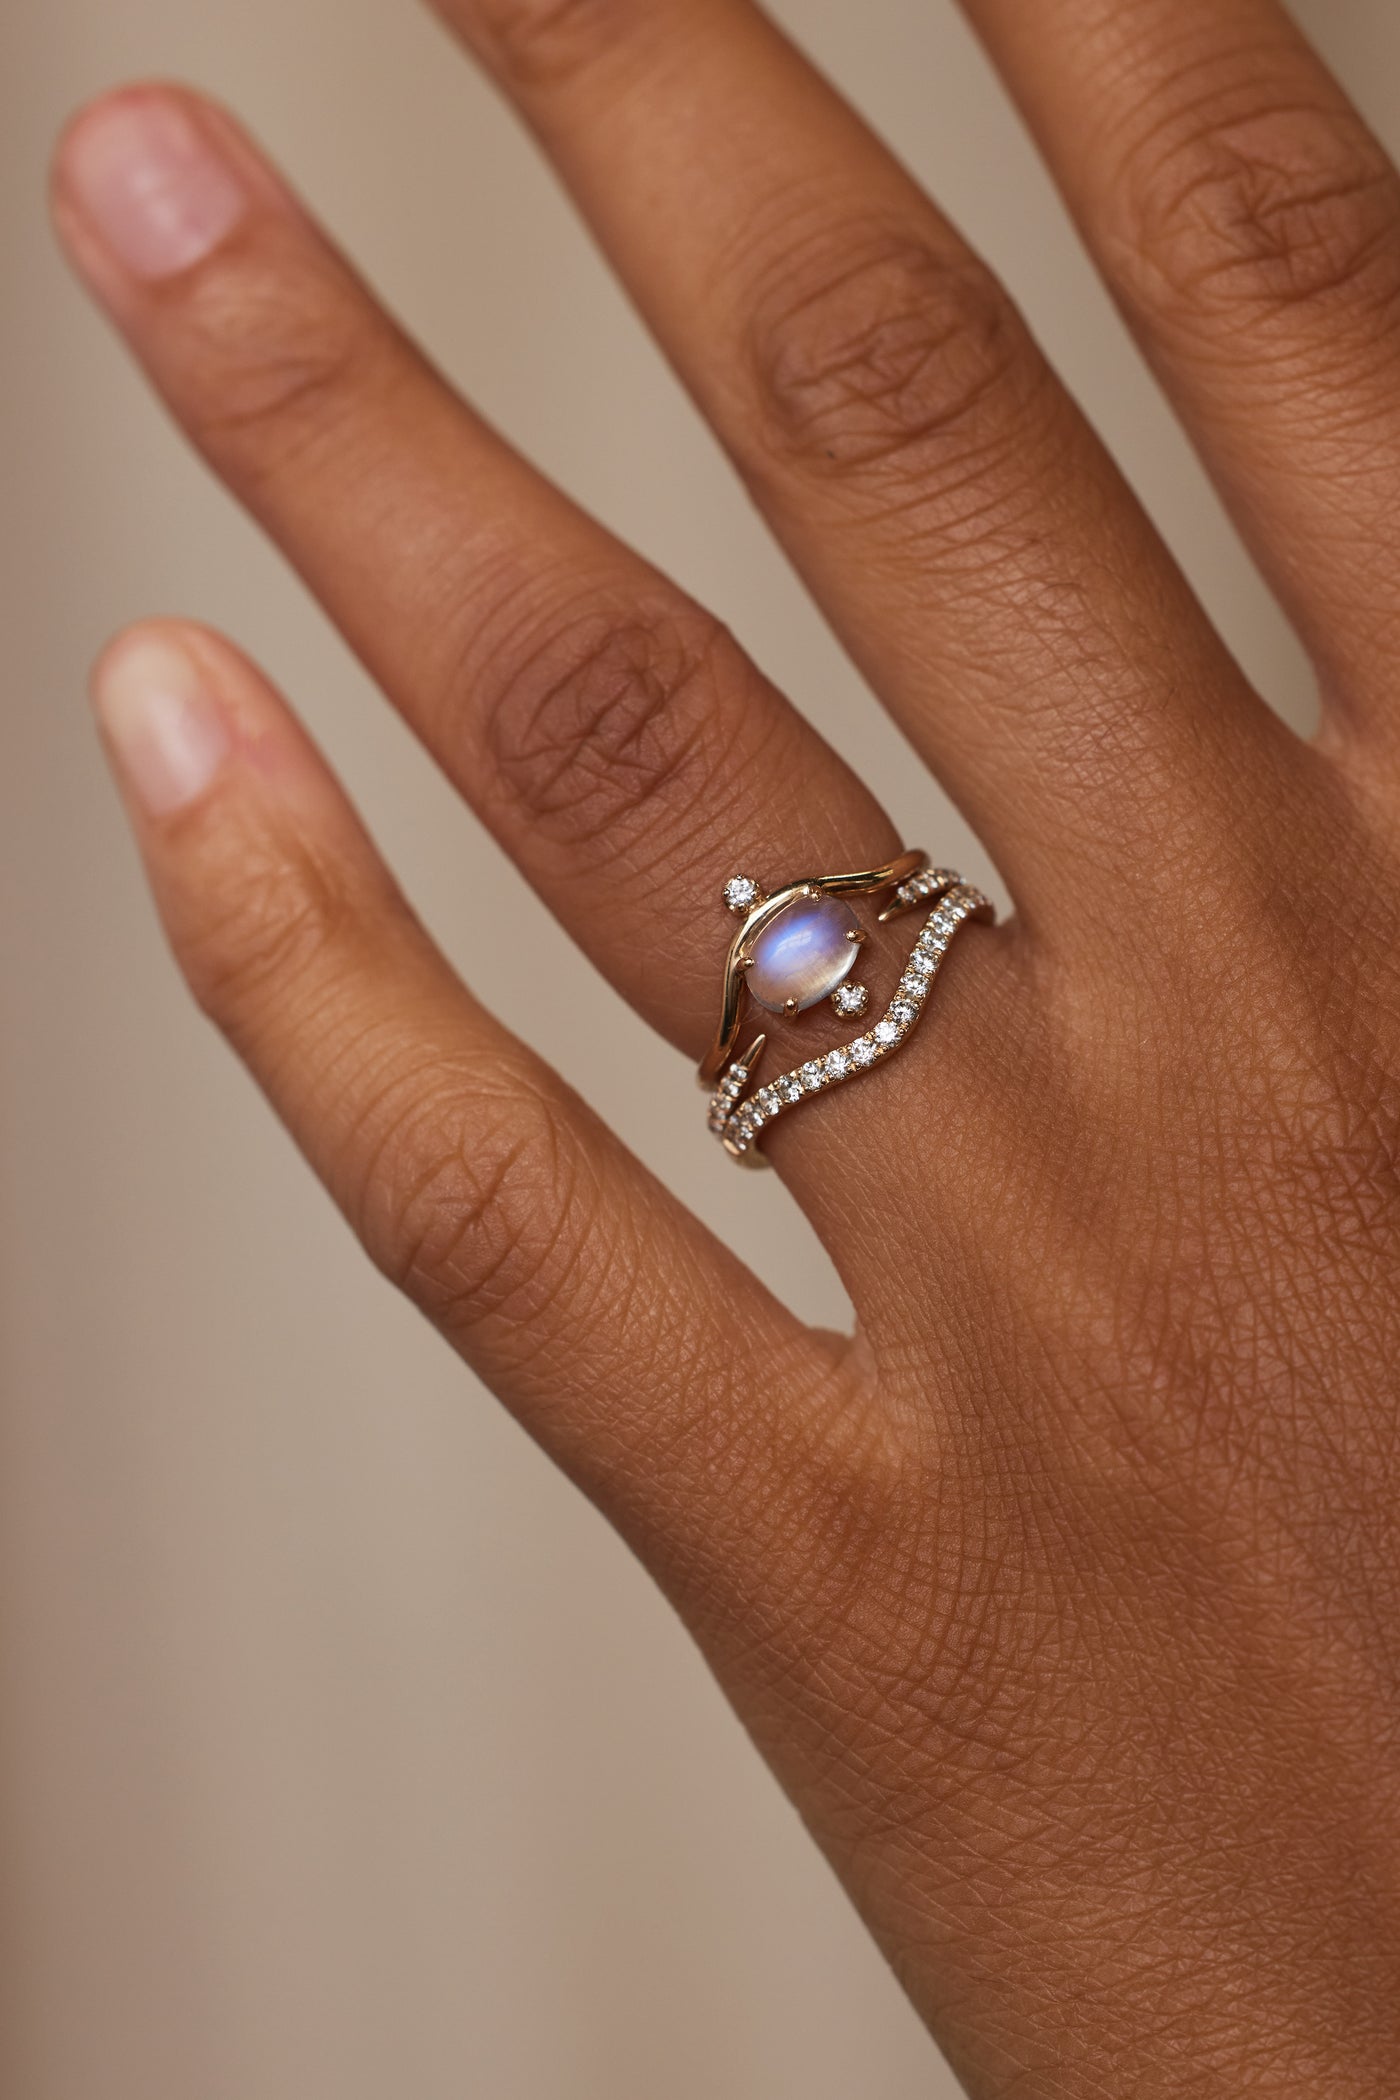 Nestled Moonstone and Diamond Ring